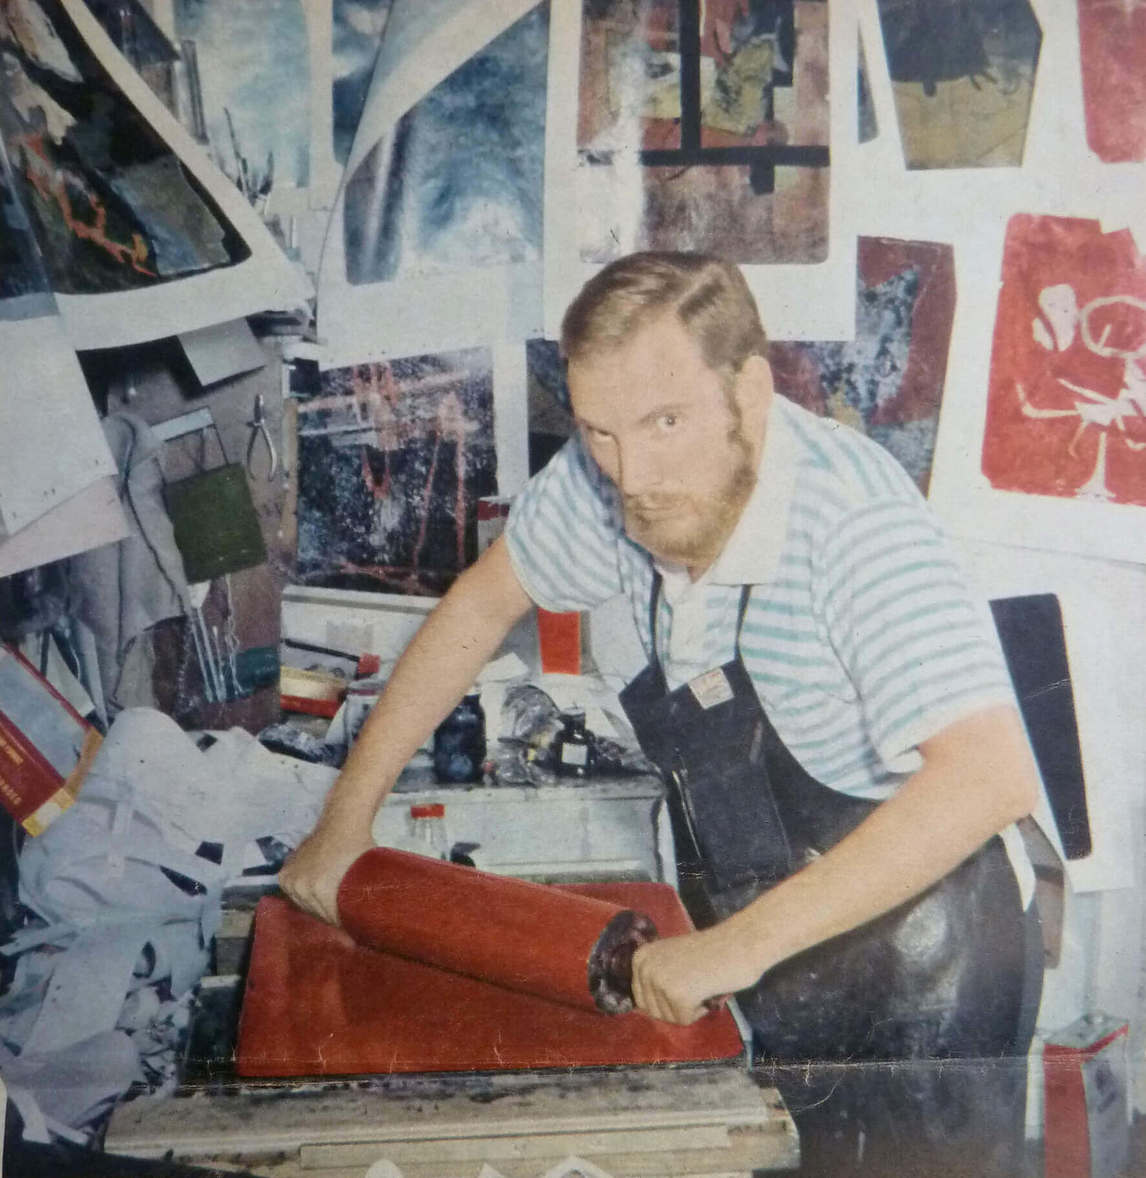 Art Canada Institute, Harold Town in his print workshop in 1957